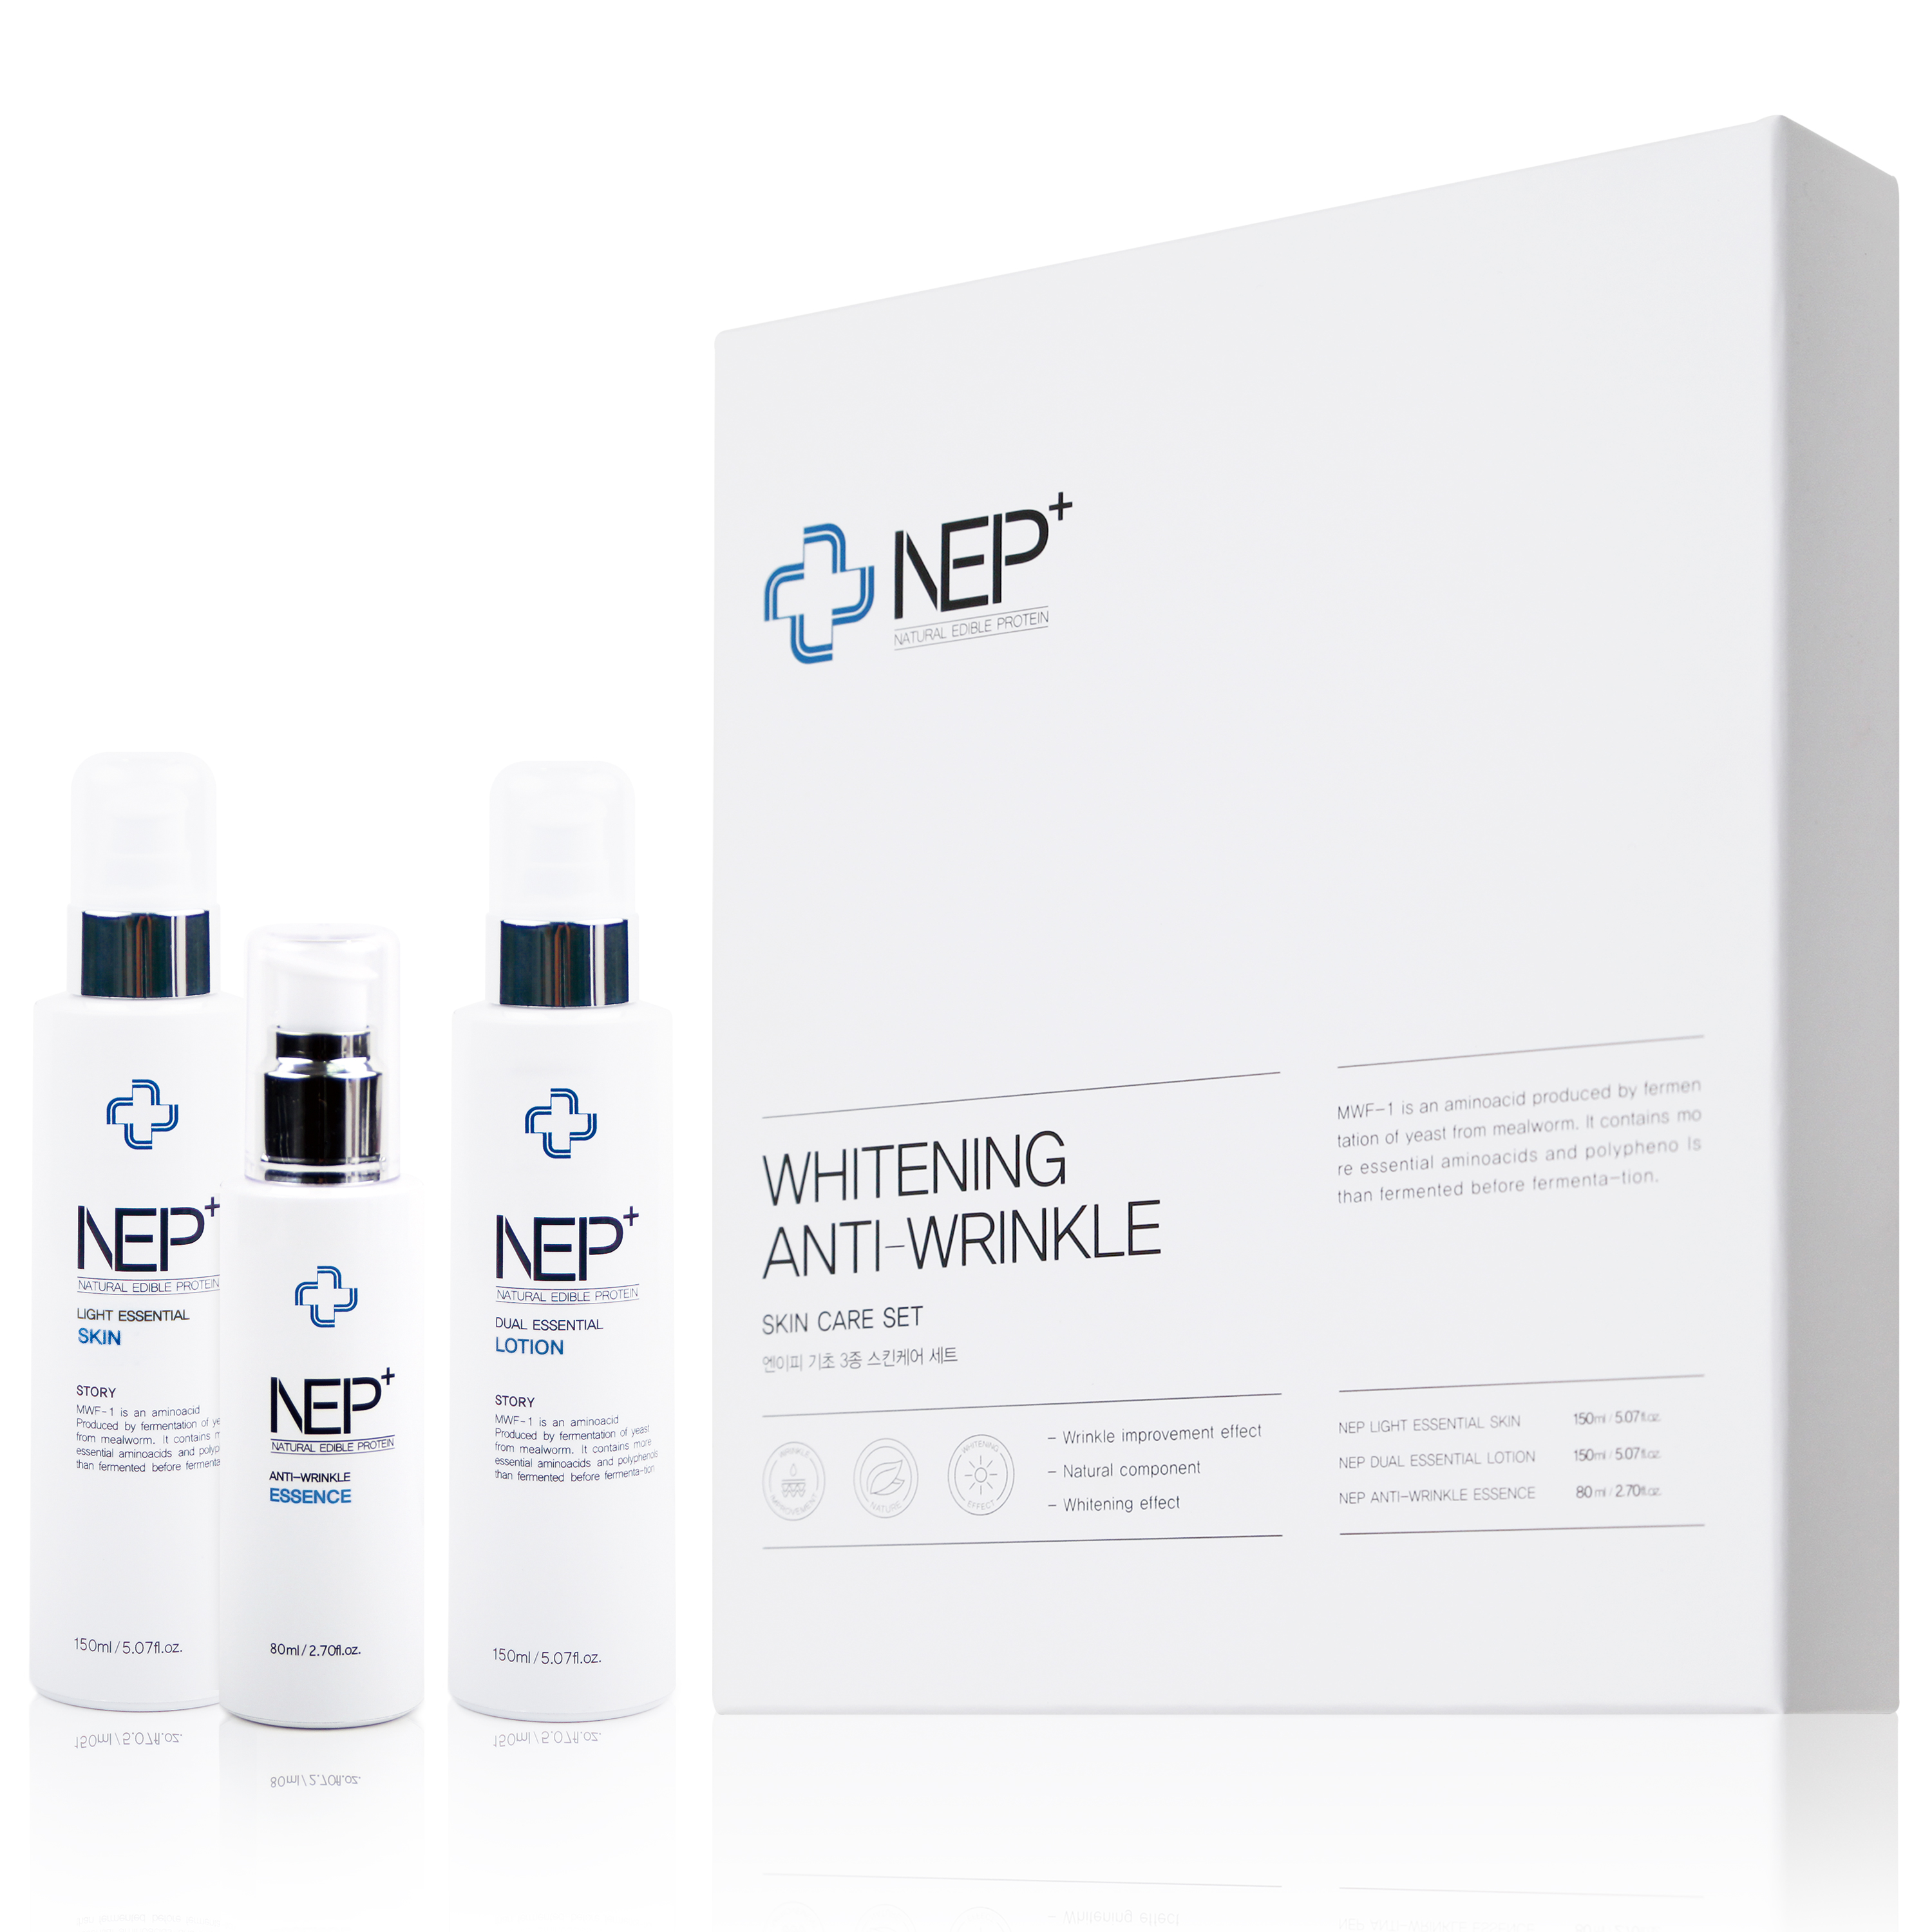 NEP+ 3 sets of skincare